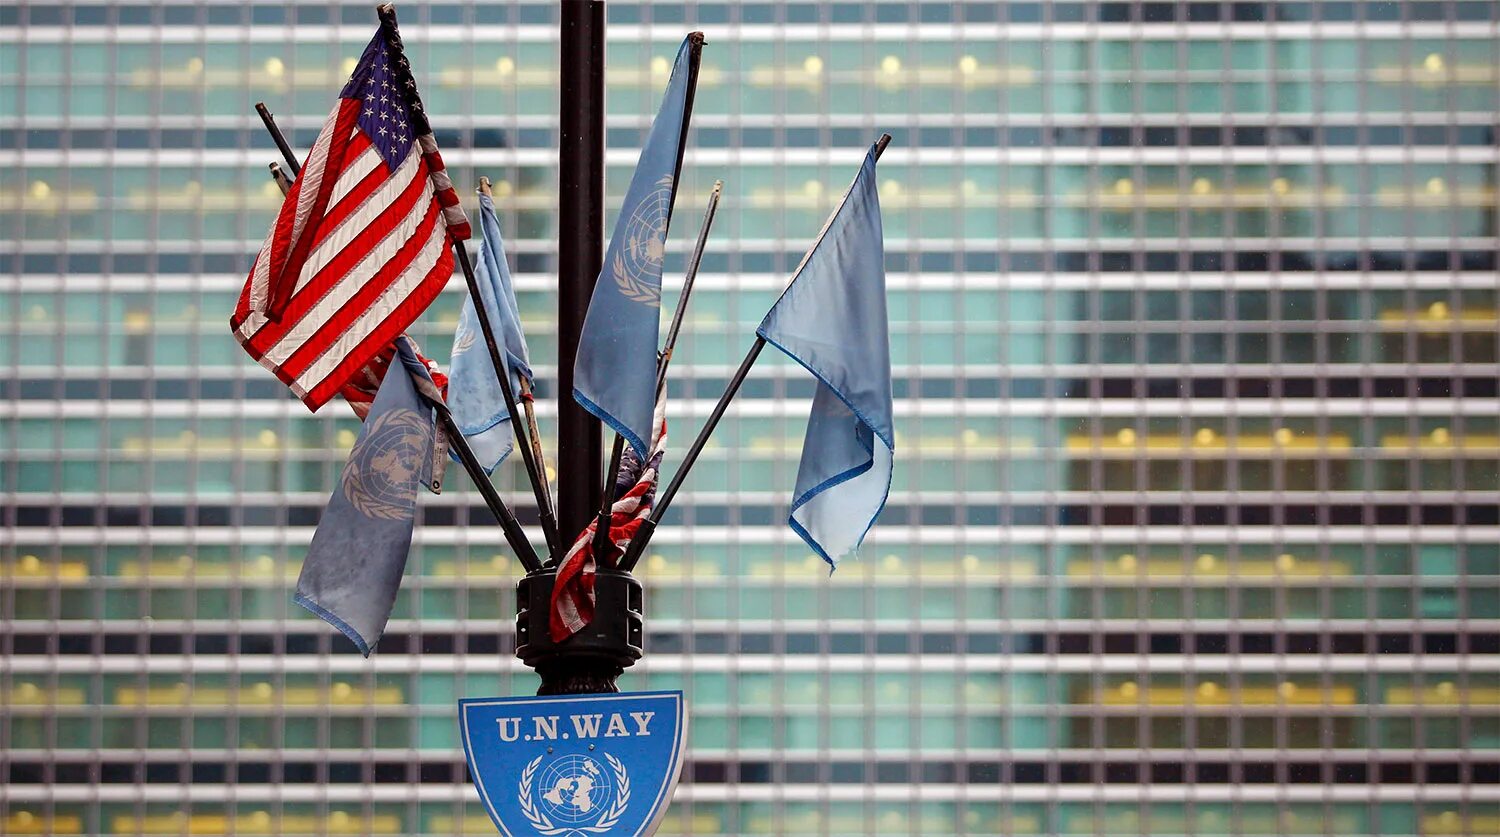 П оон. Штаб ООН В Нью-Йорке. Штаб квартира ООН. Здание ООН В Нью-Йорке. Здание ООН В США.